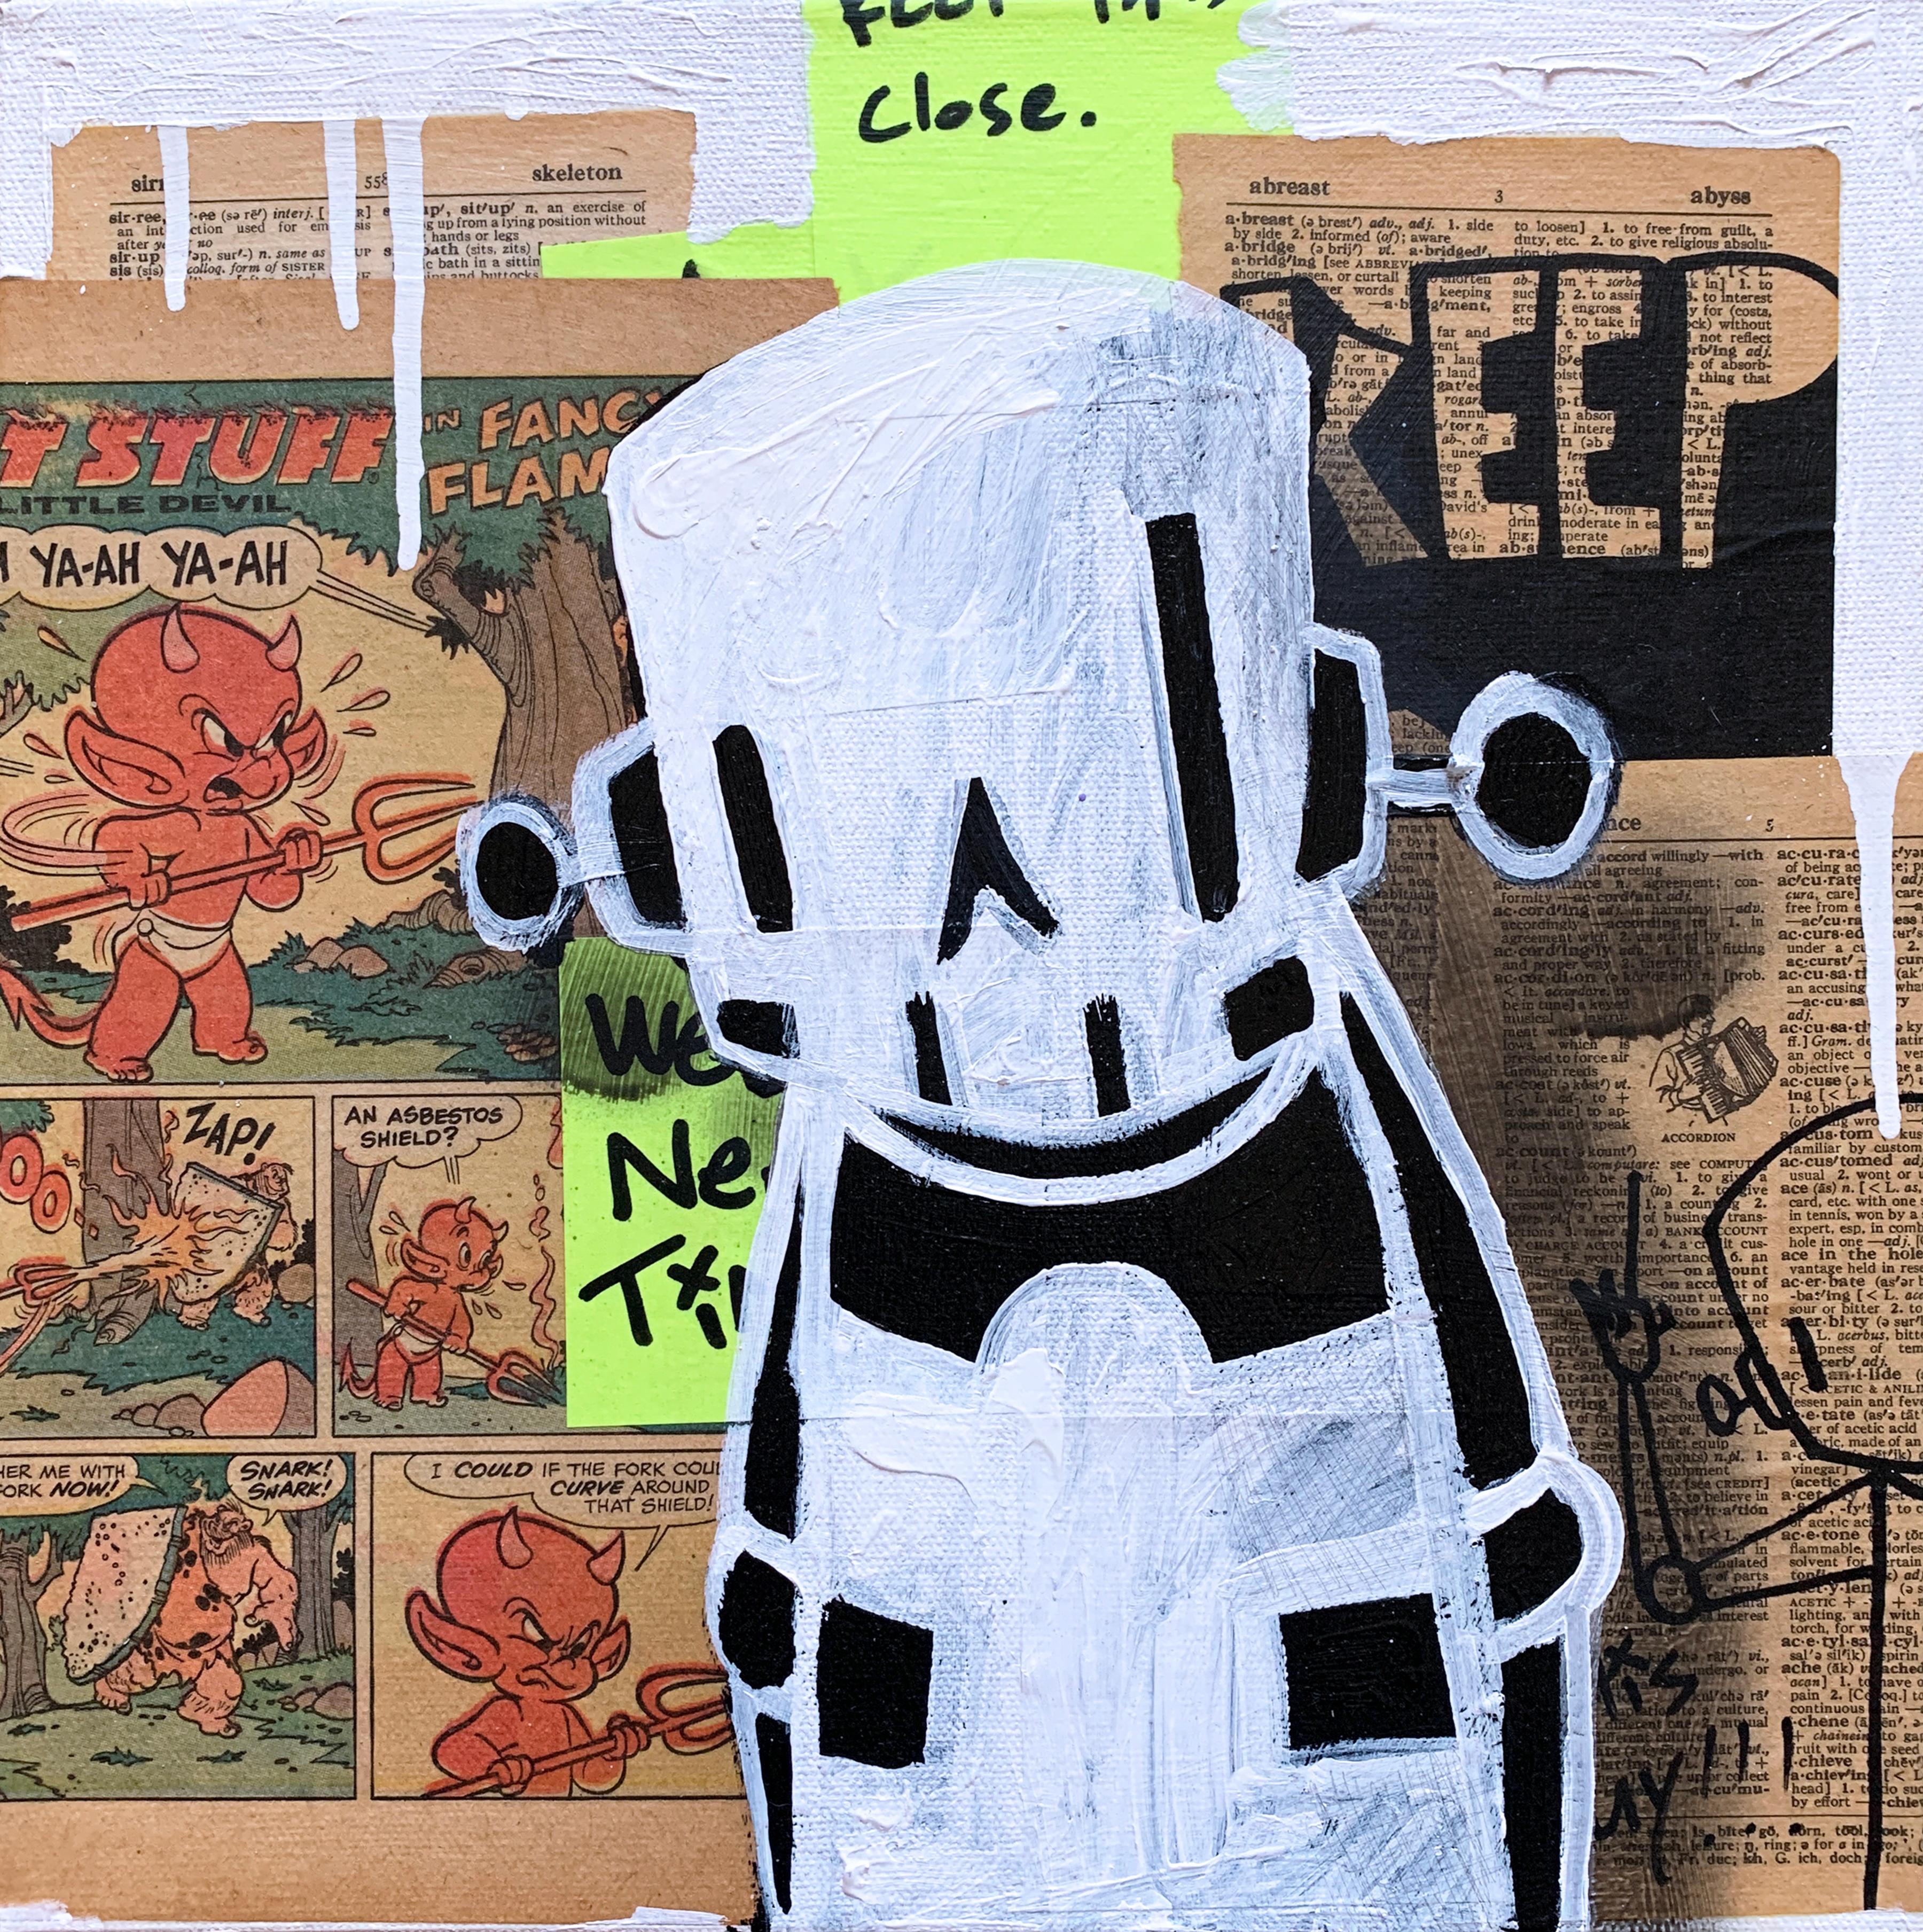 "Within Arms Length" (2022), Chris RWK street art, aerosol, drips, graffiti, illustration, street artist, vintage comics, Staten Island, NY, New York, NYC, character, robot, robots will kill, mixed media, spray paint, drip, splatter, text, paint